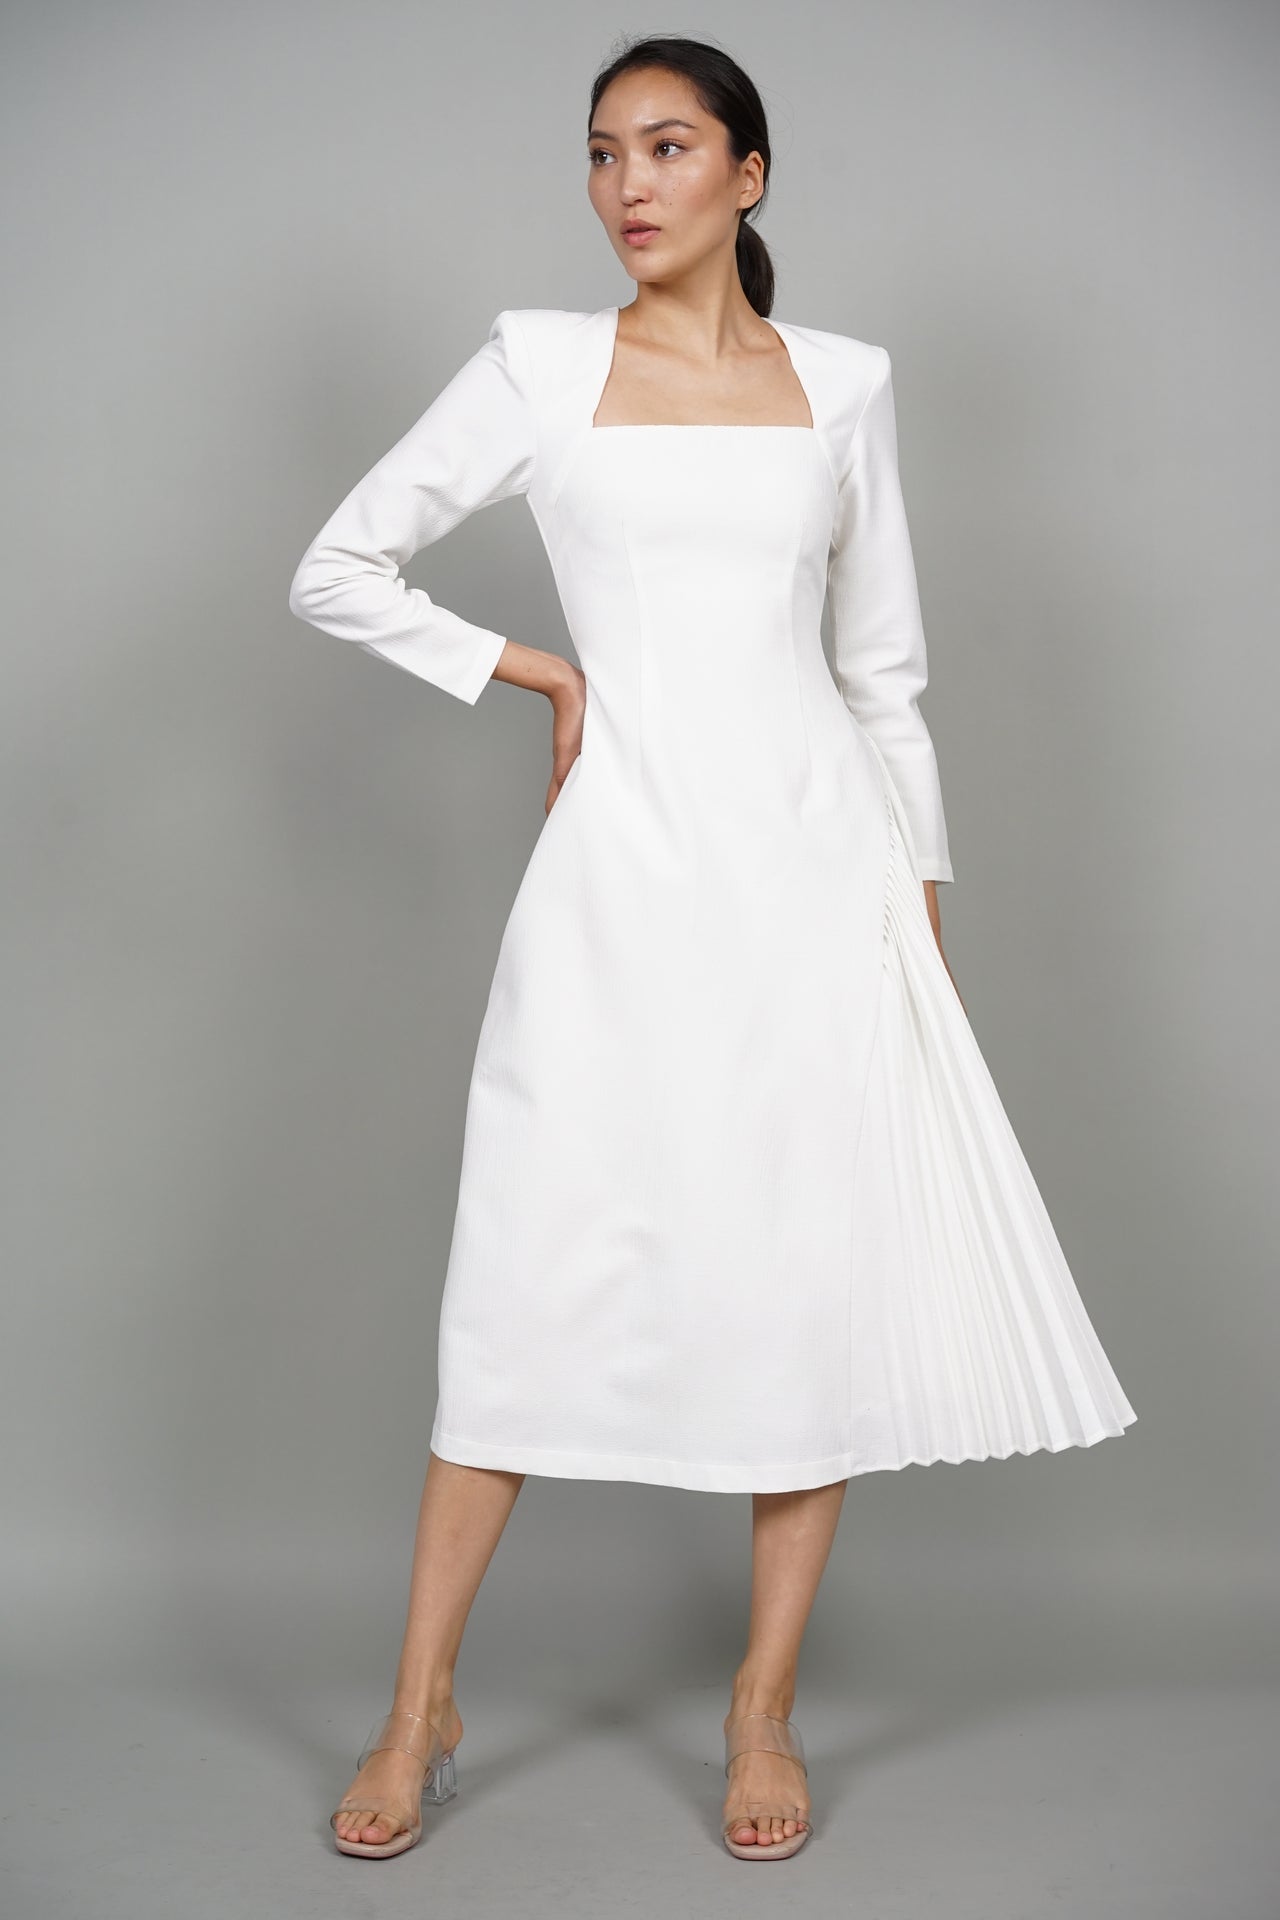 Tenzi Midi Dress in White